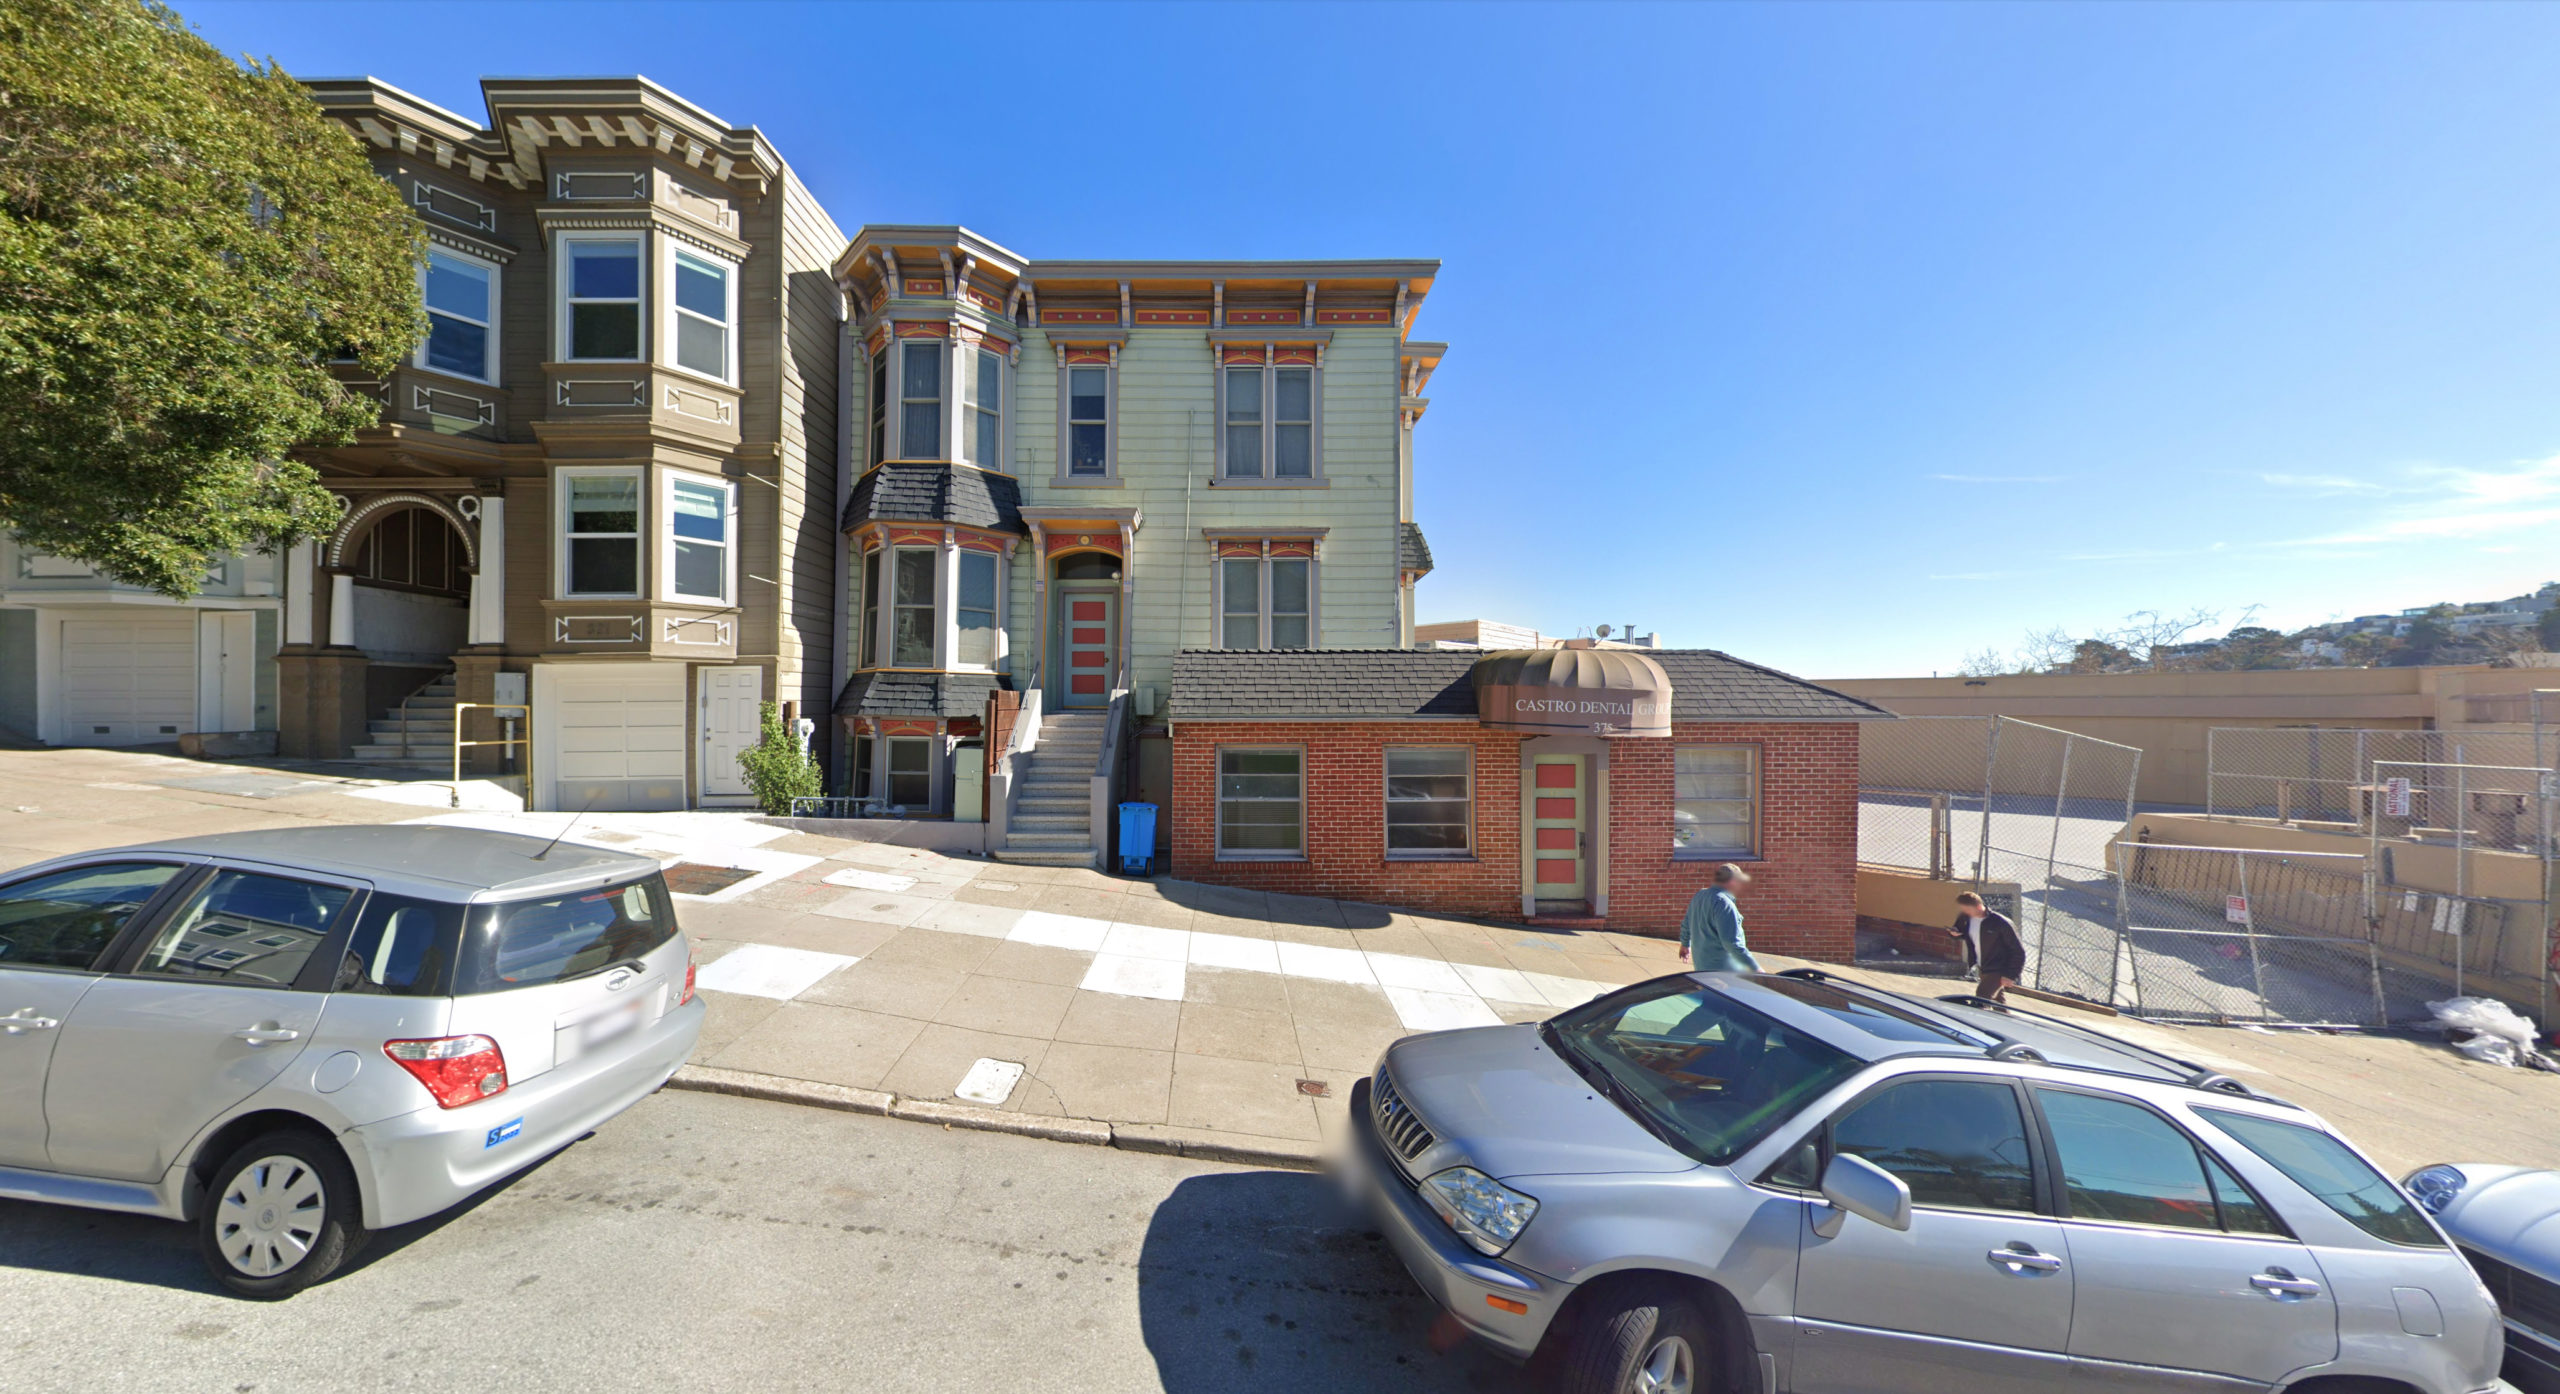 375 Castro Street, image via Google Street View